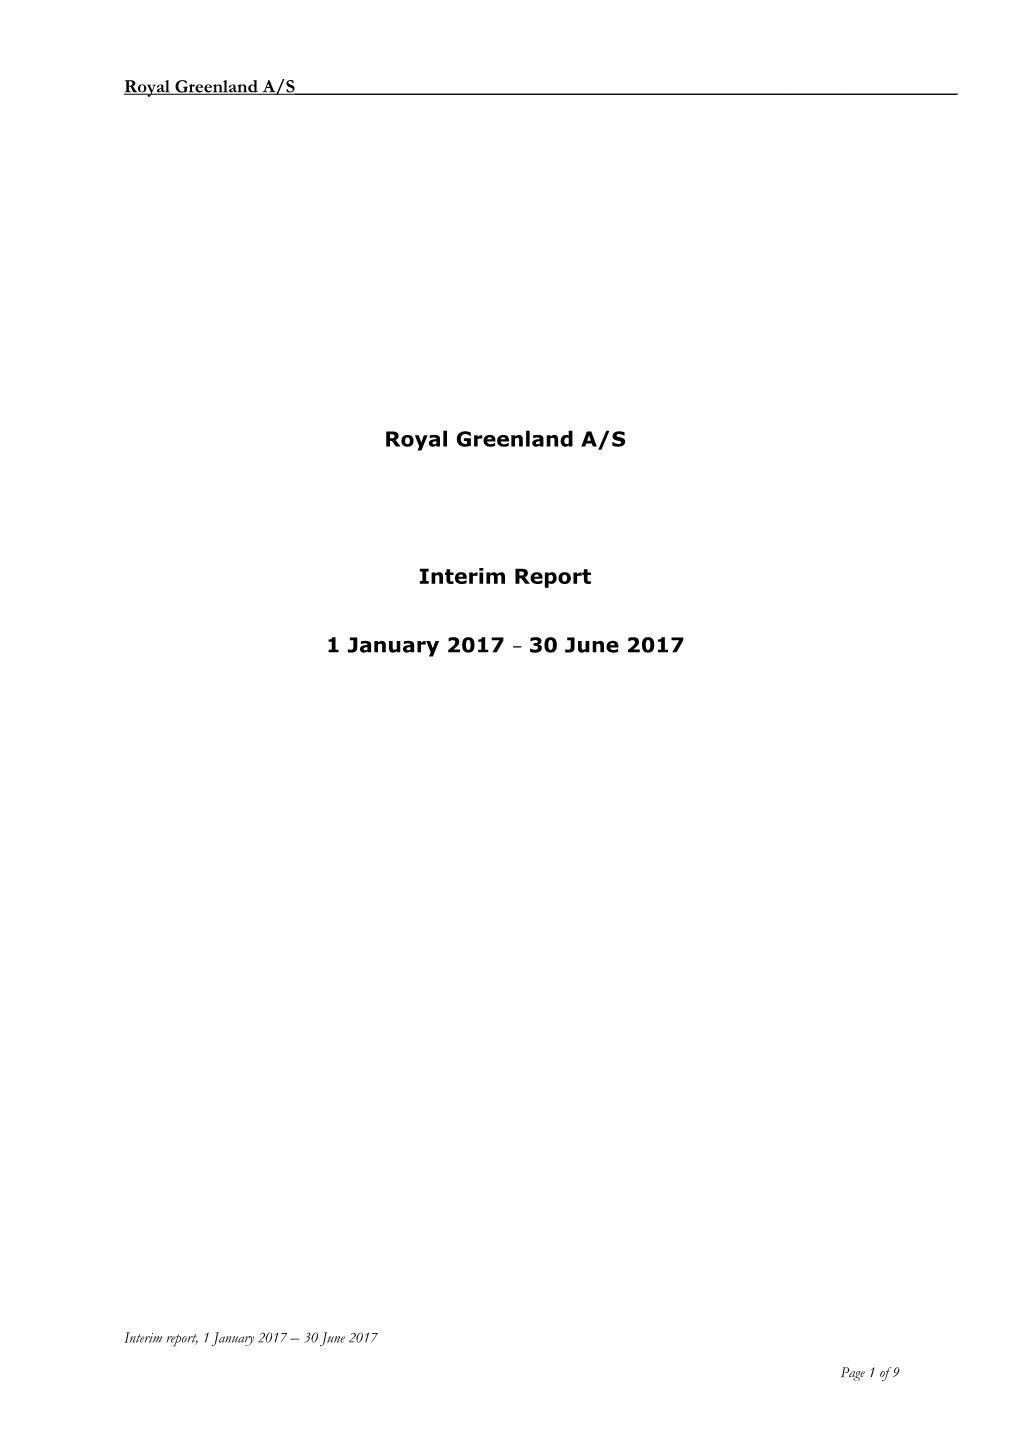 Royal Greenland A/S Interim Report 1 January 2017 – 30 June 2017